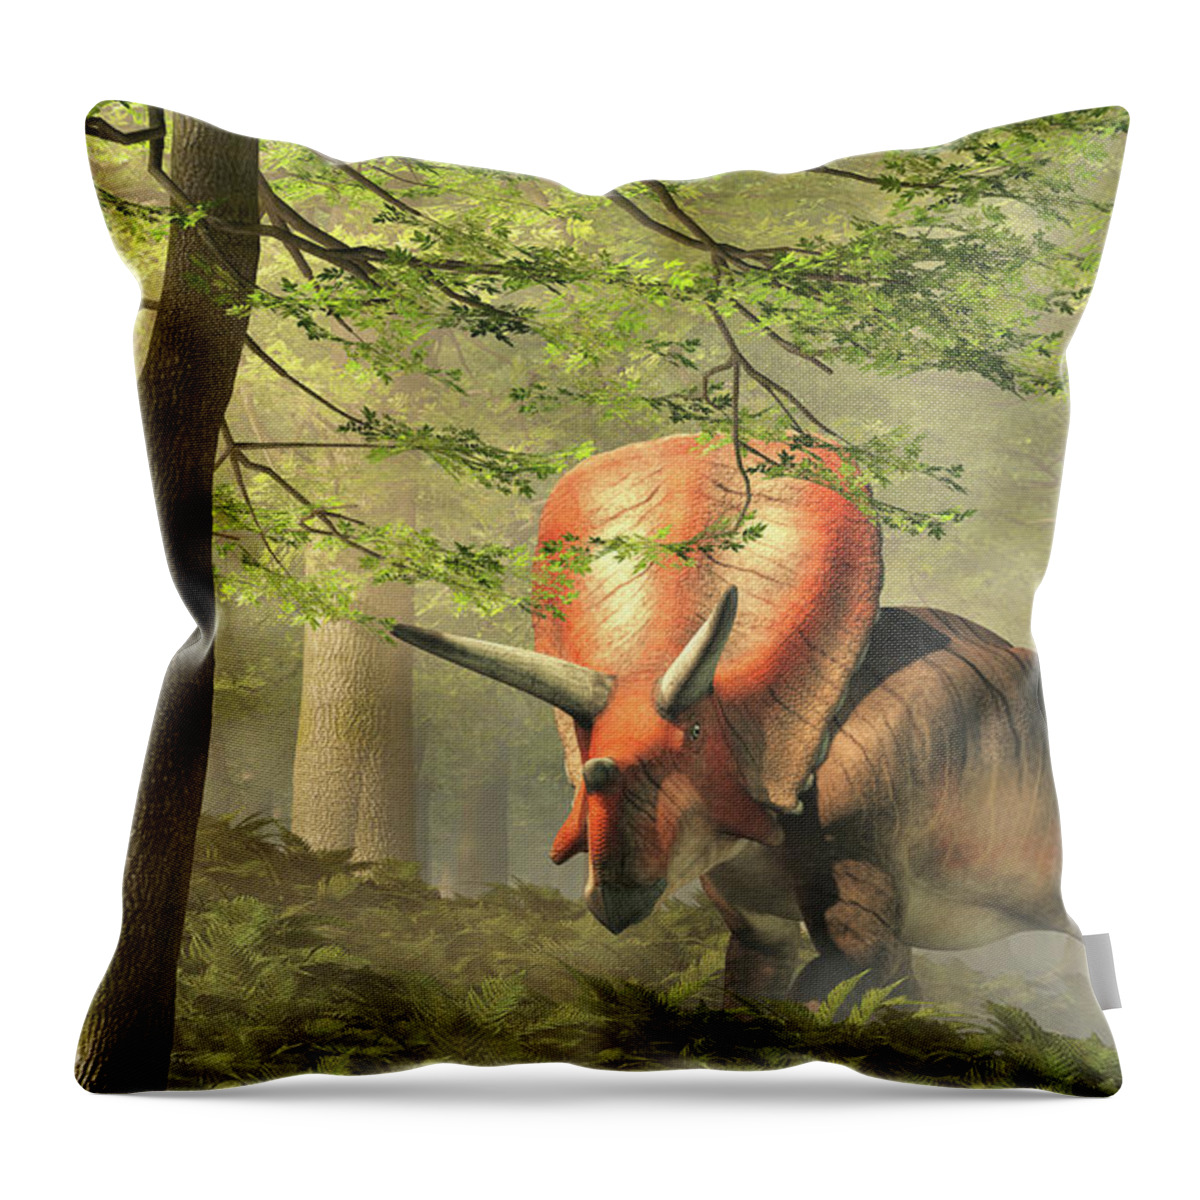 Torosaurus Throw Pillow featuring the digital art Torosaurus in a Forest by Daniel Eskridge